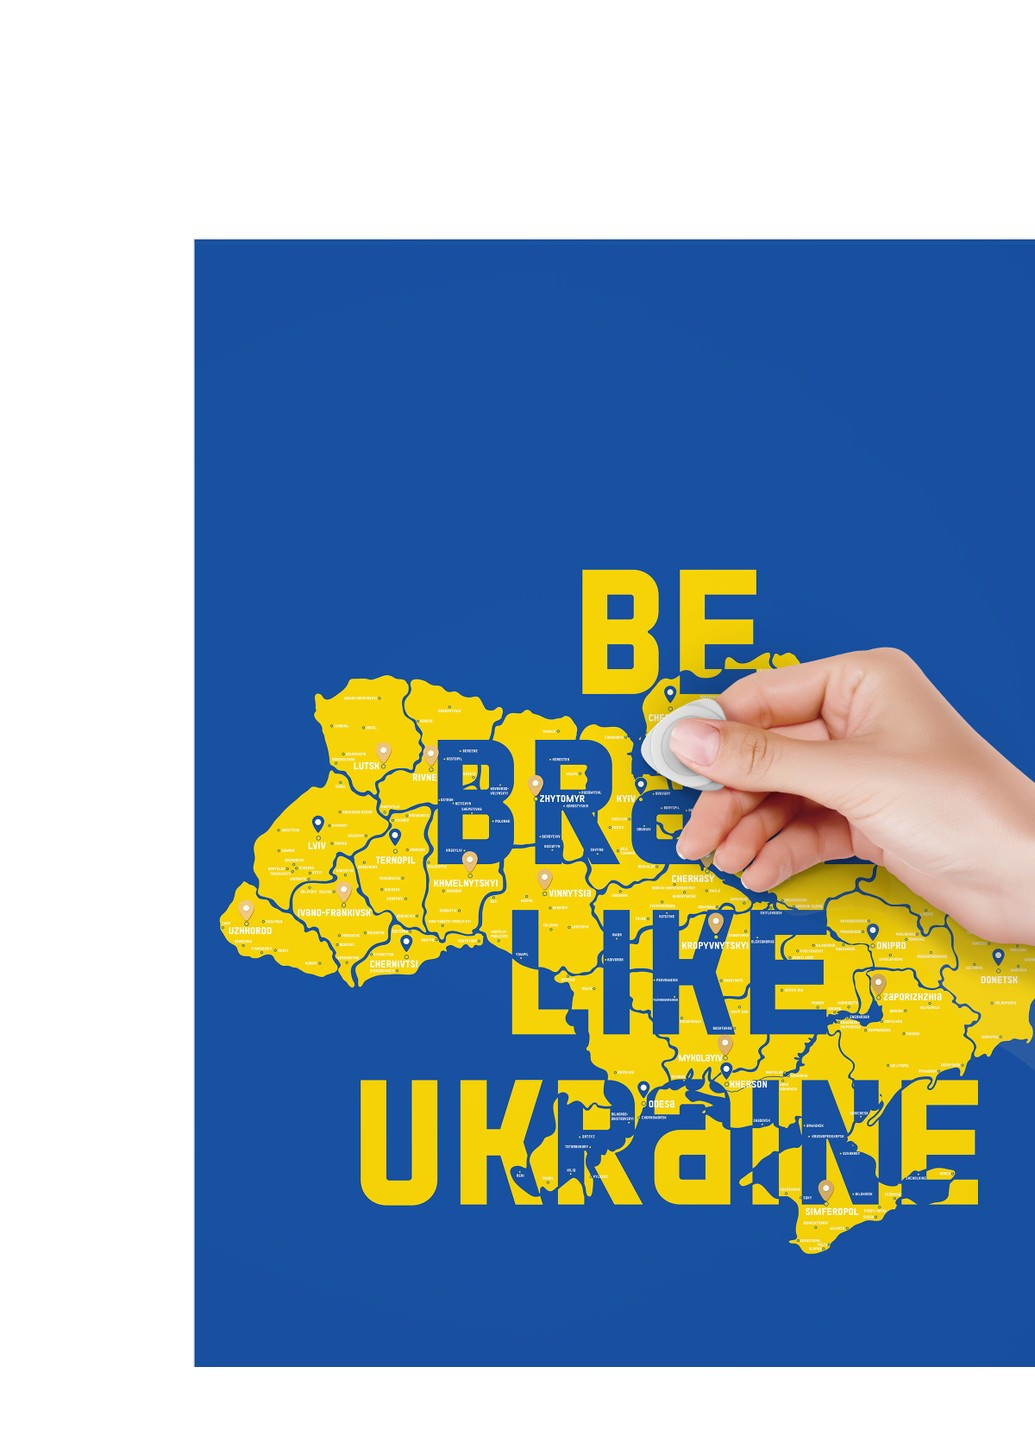 Скретч карта Украины Travel Map Brave Ukraine 1DEA.me (254288774)